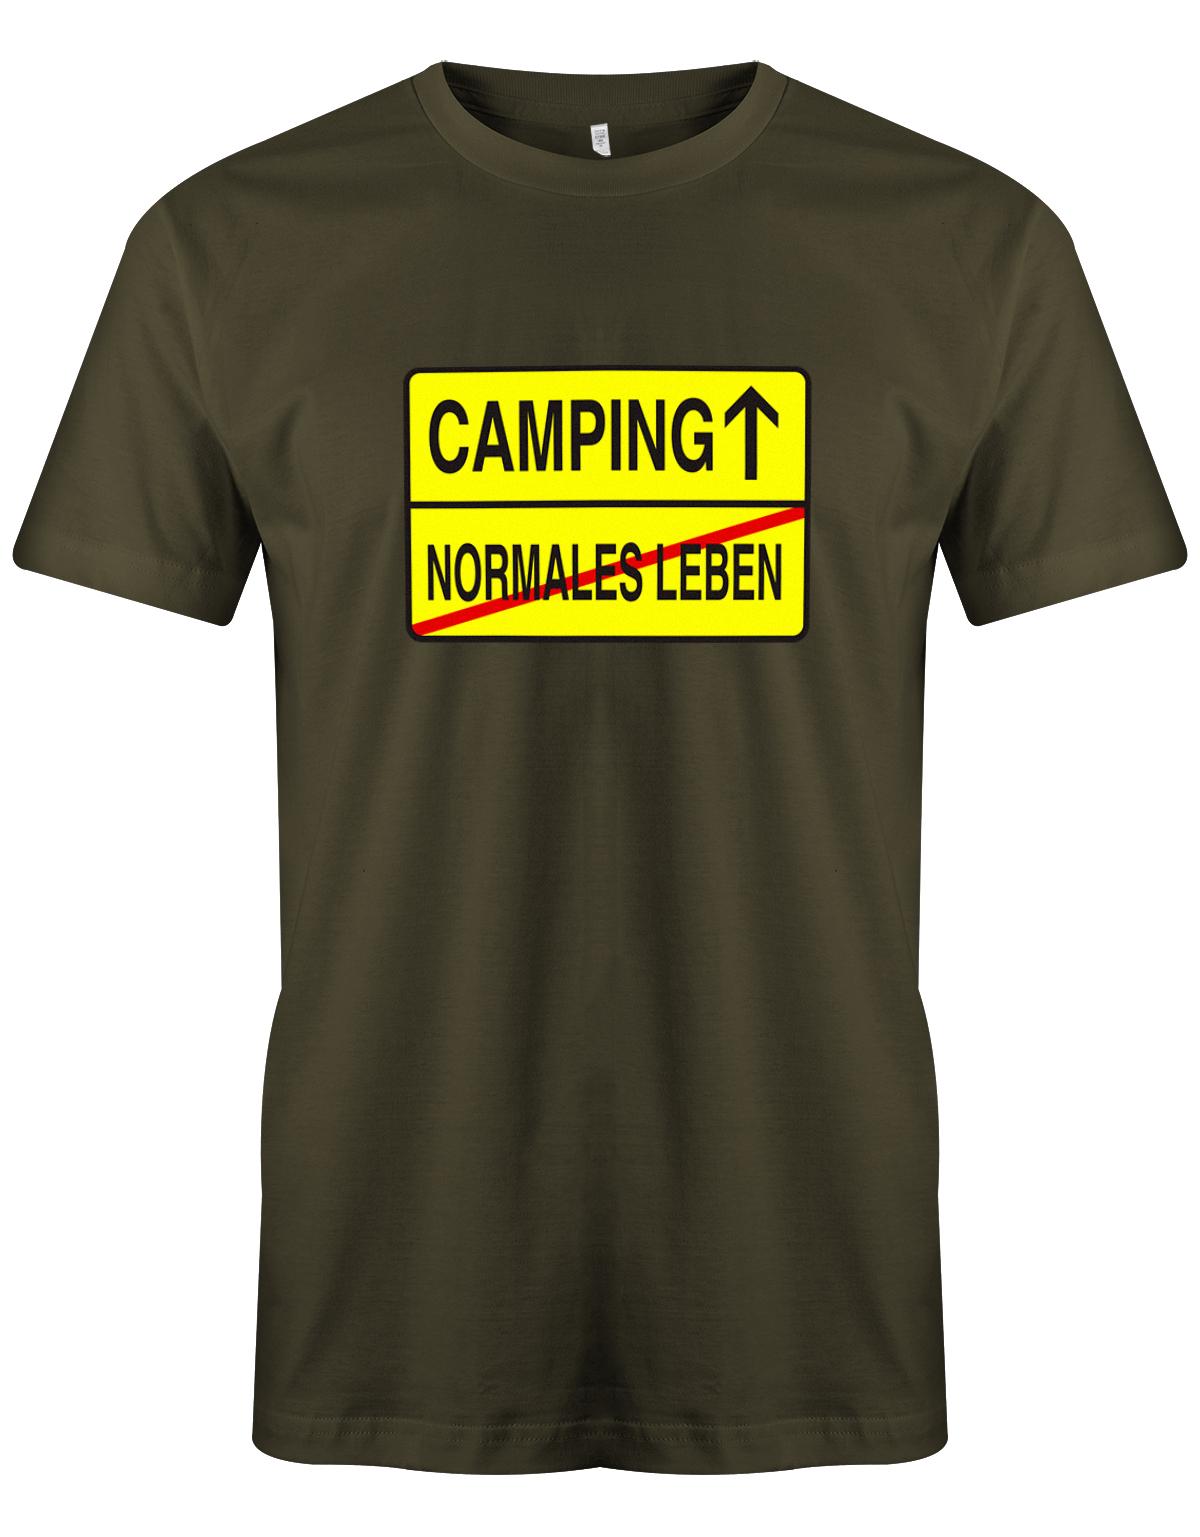 Camping-Normales-leben-Ortschild-herren-Camping-Shirt-Army